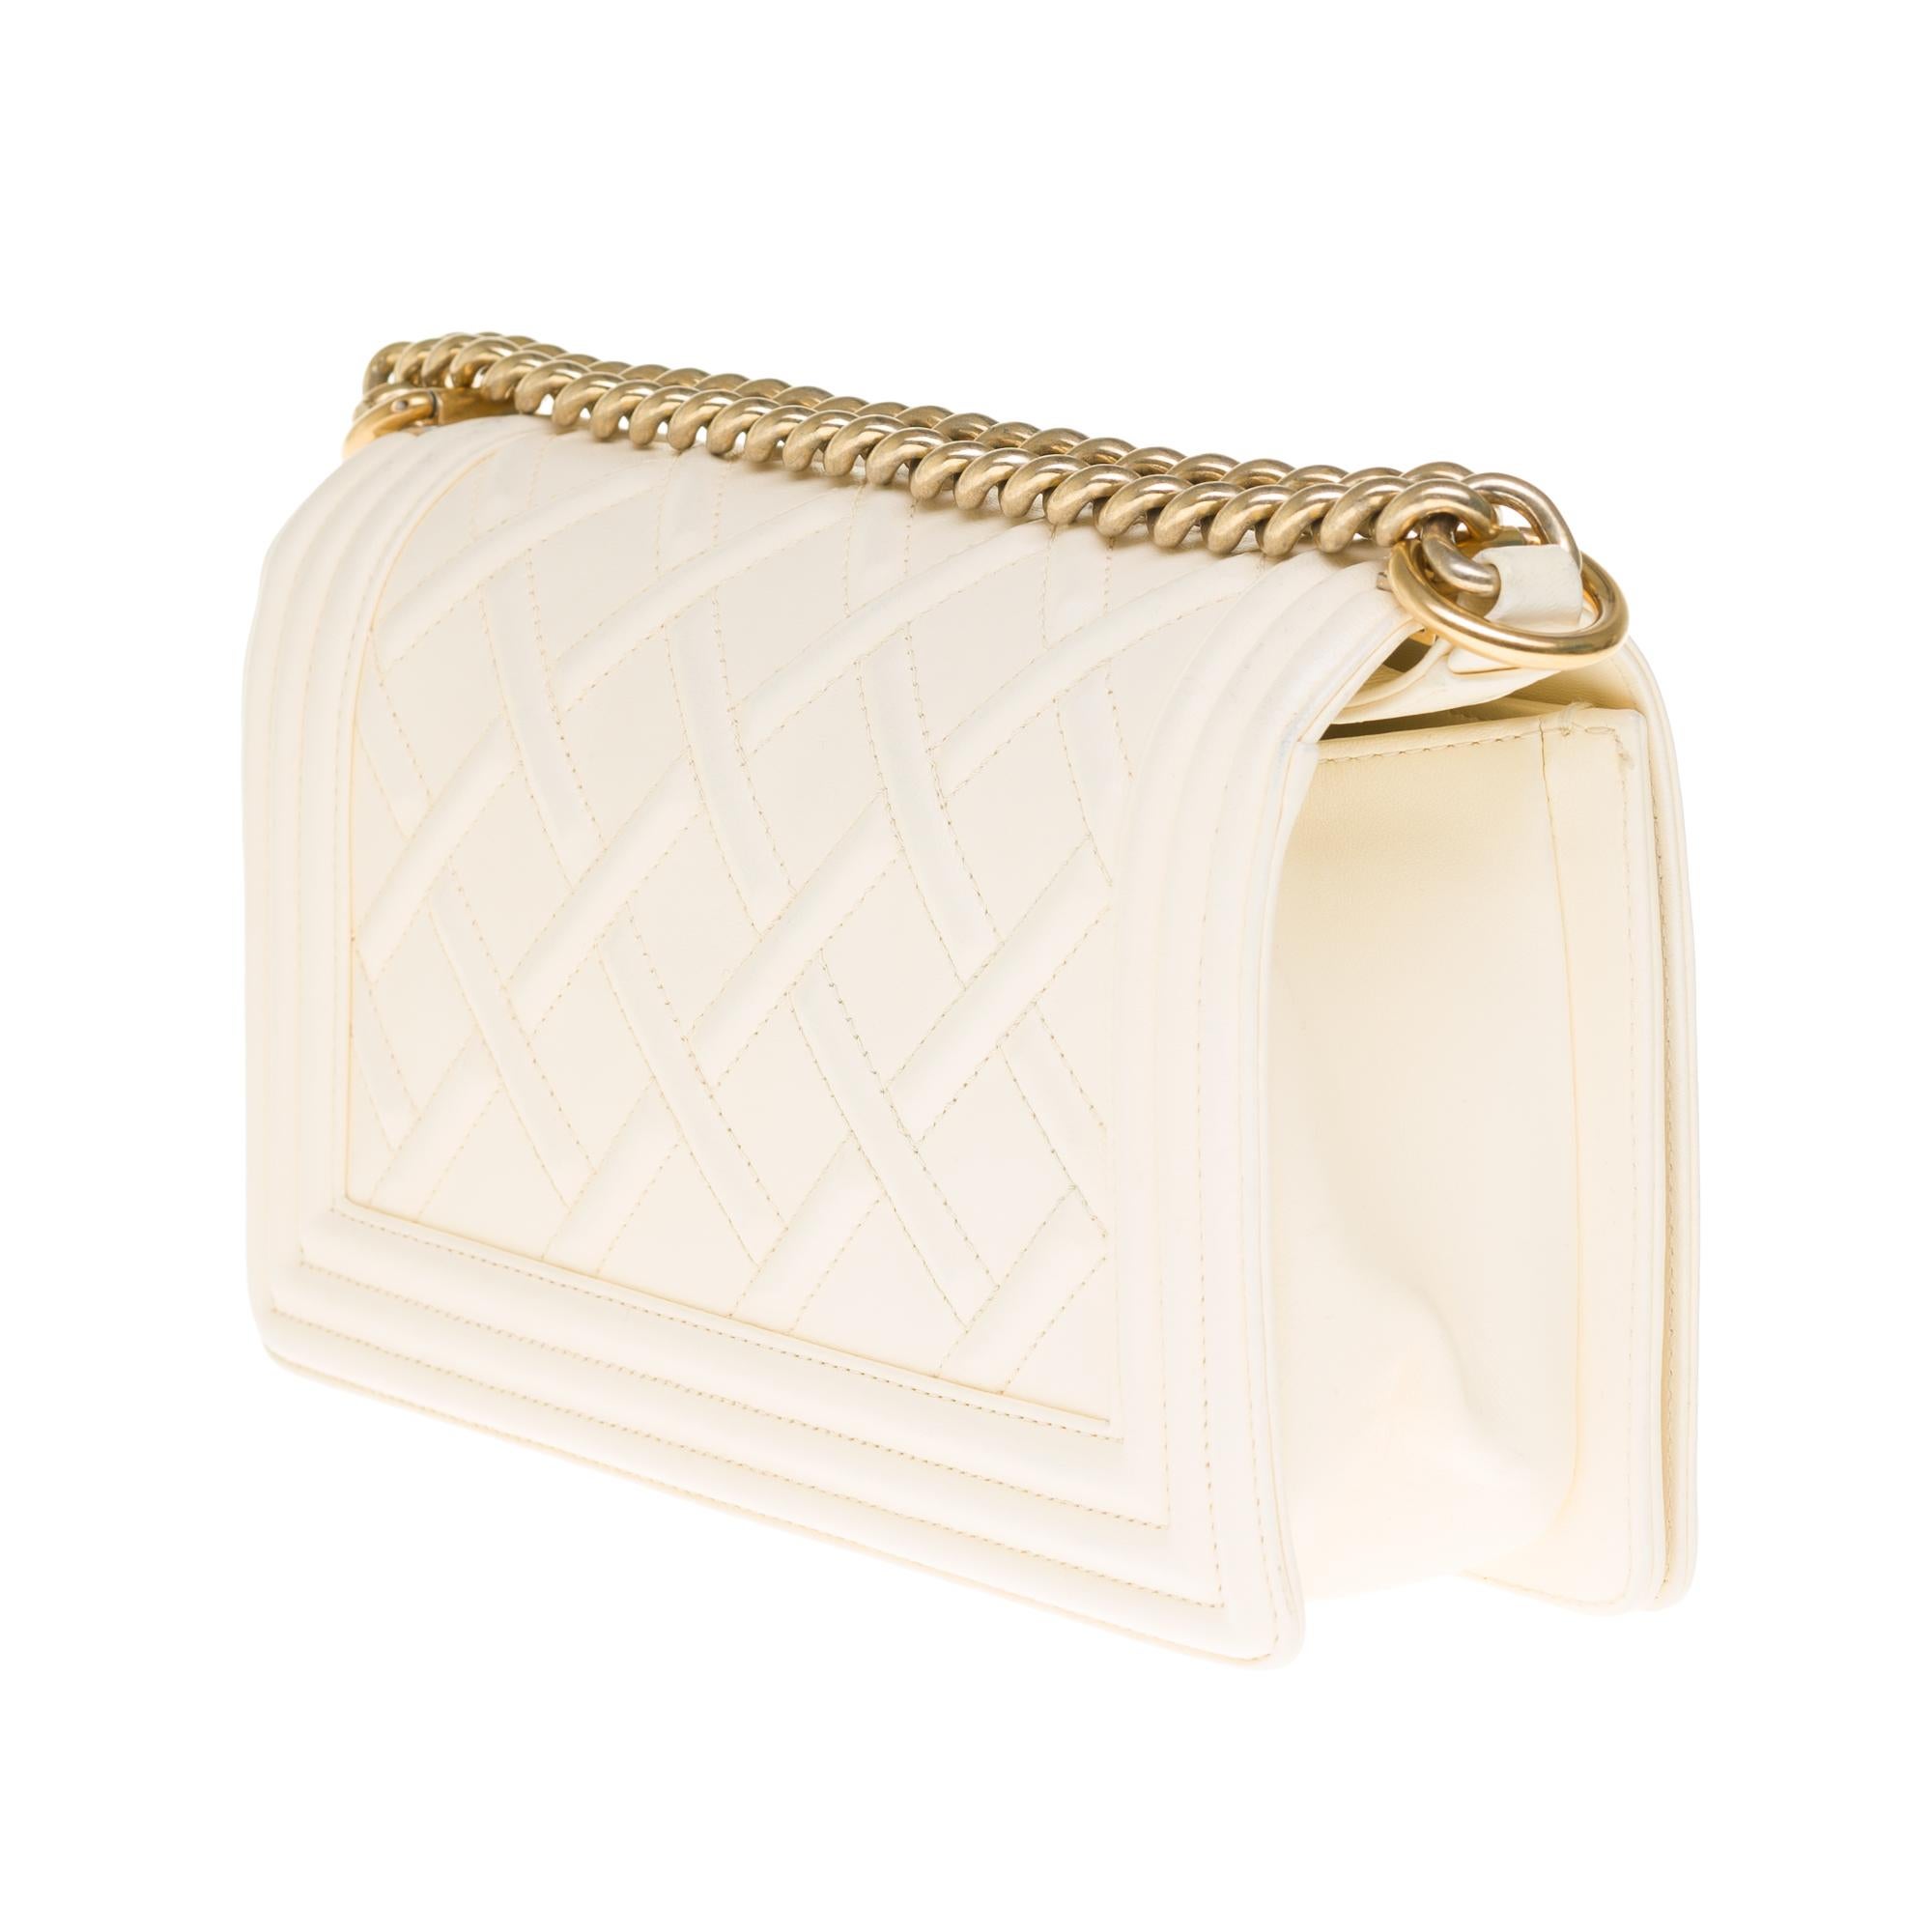 Women's Chanel Boy Paris/Edinburgh handbag in ivory embossed leather, GHW !